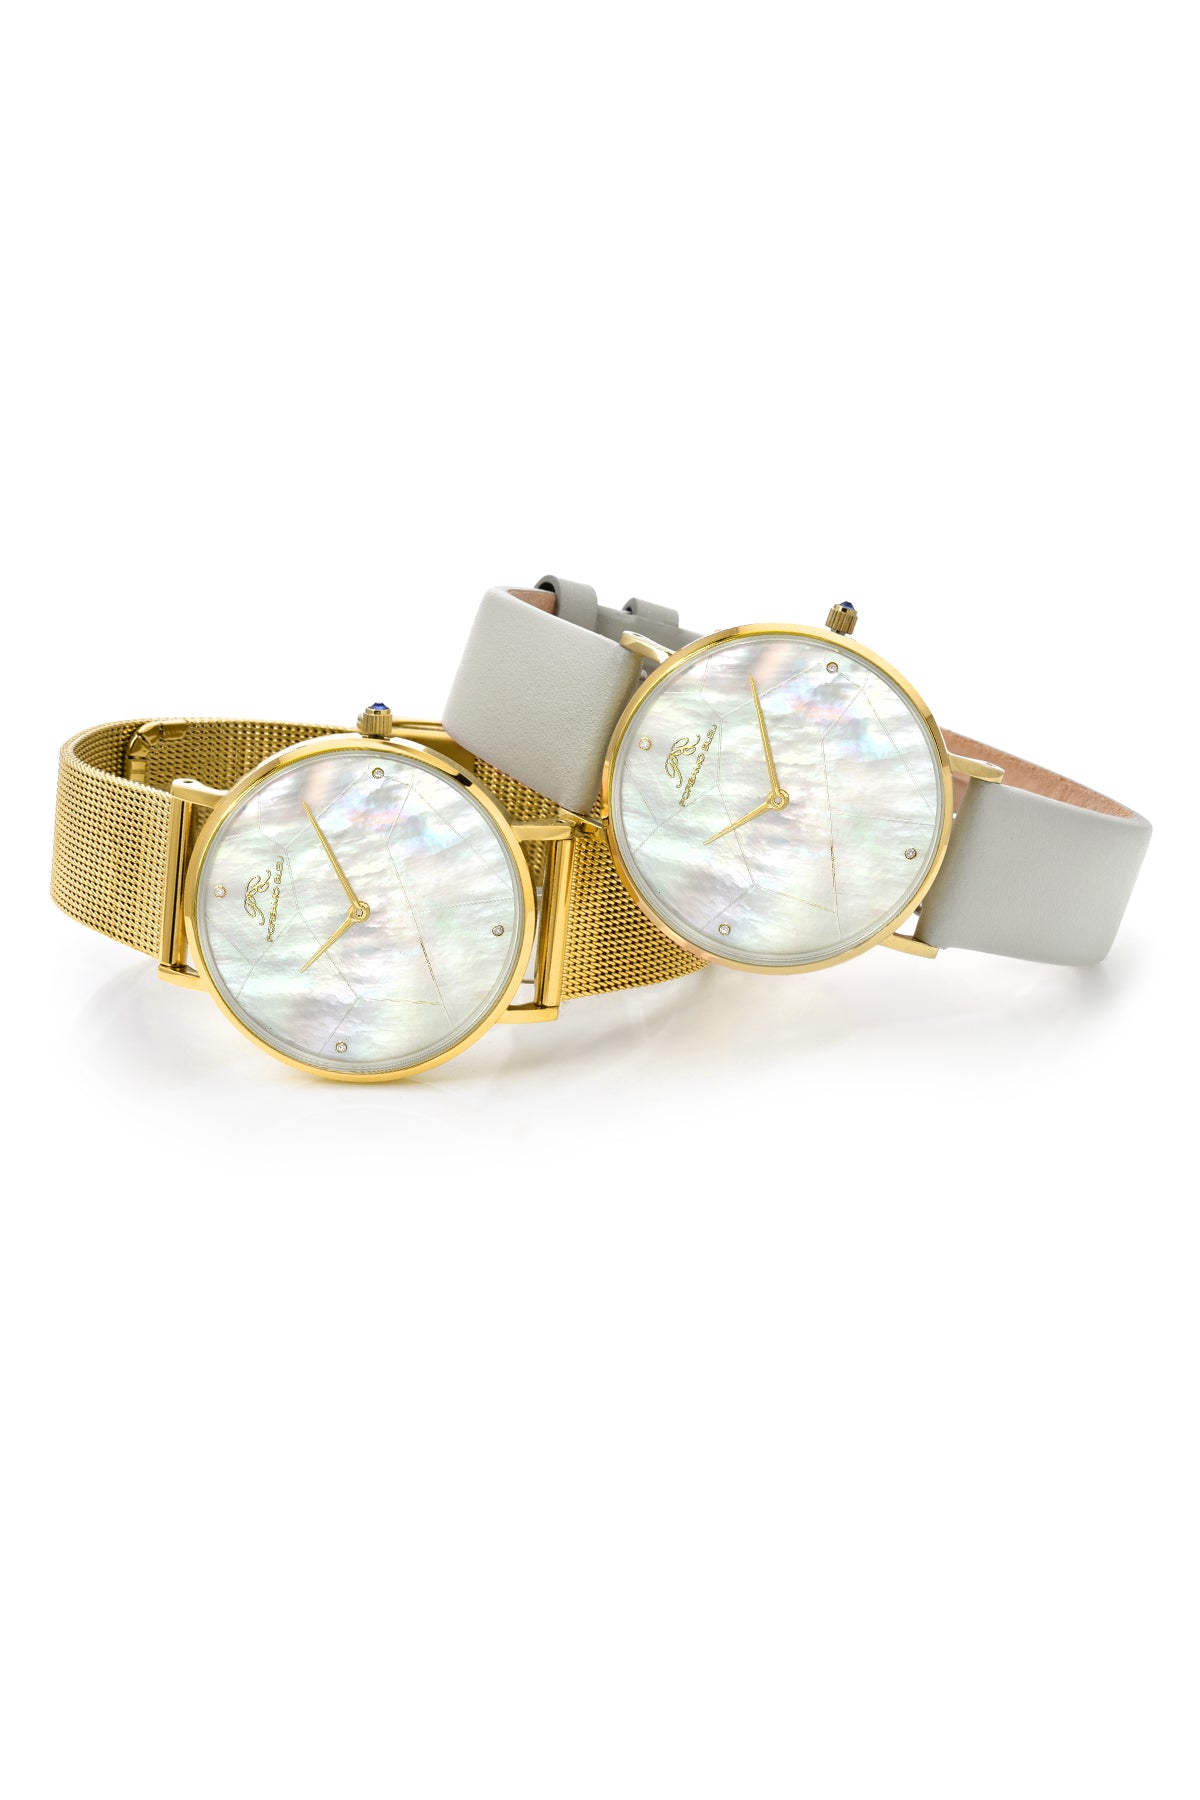 Porsamo Bleu Paloma luxury diamond women's watch, interchangeable bands, gold, white, grey 851BPAS